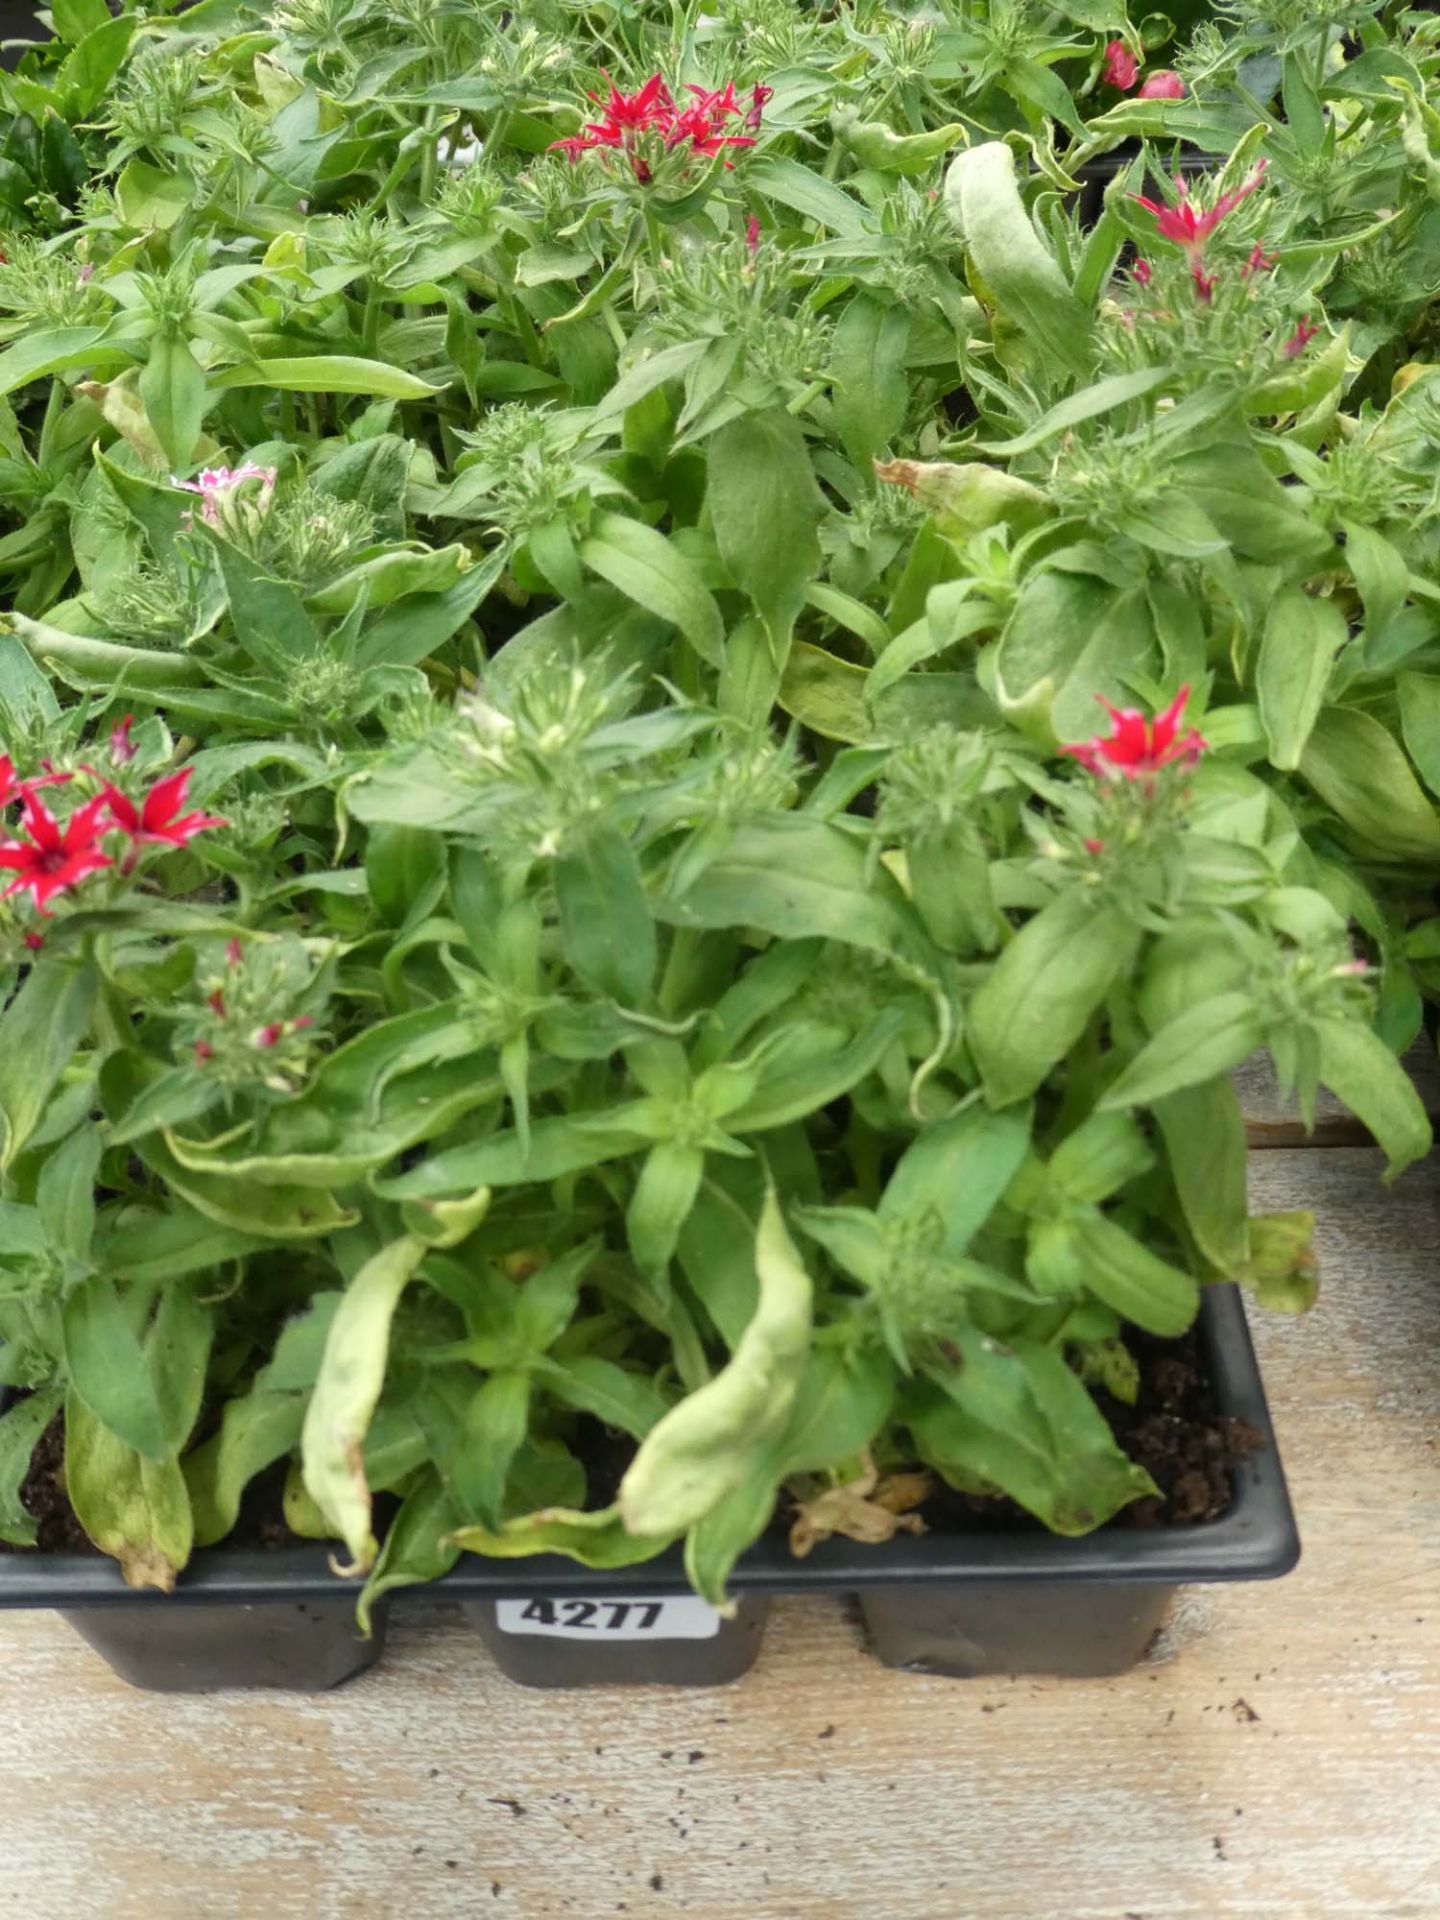 3 small trays of Phlox plants